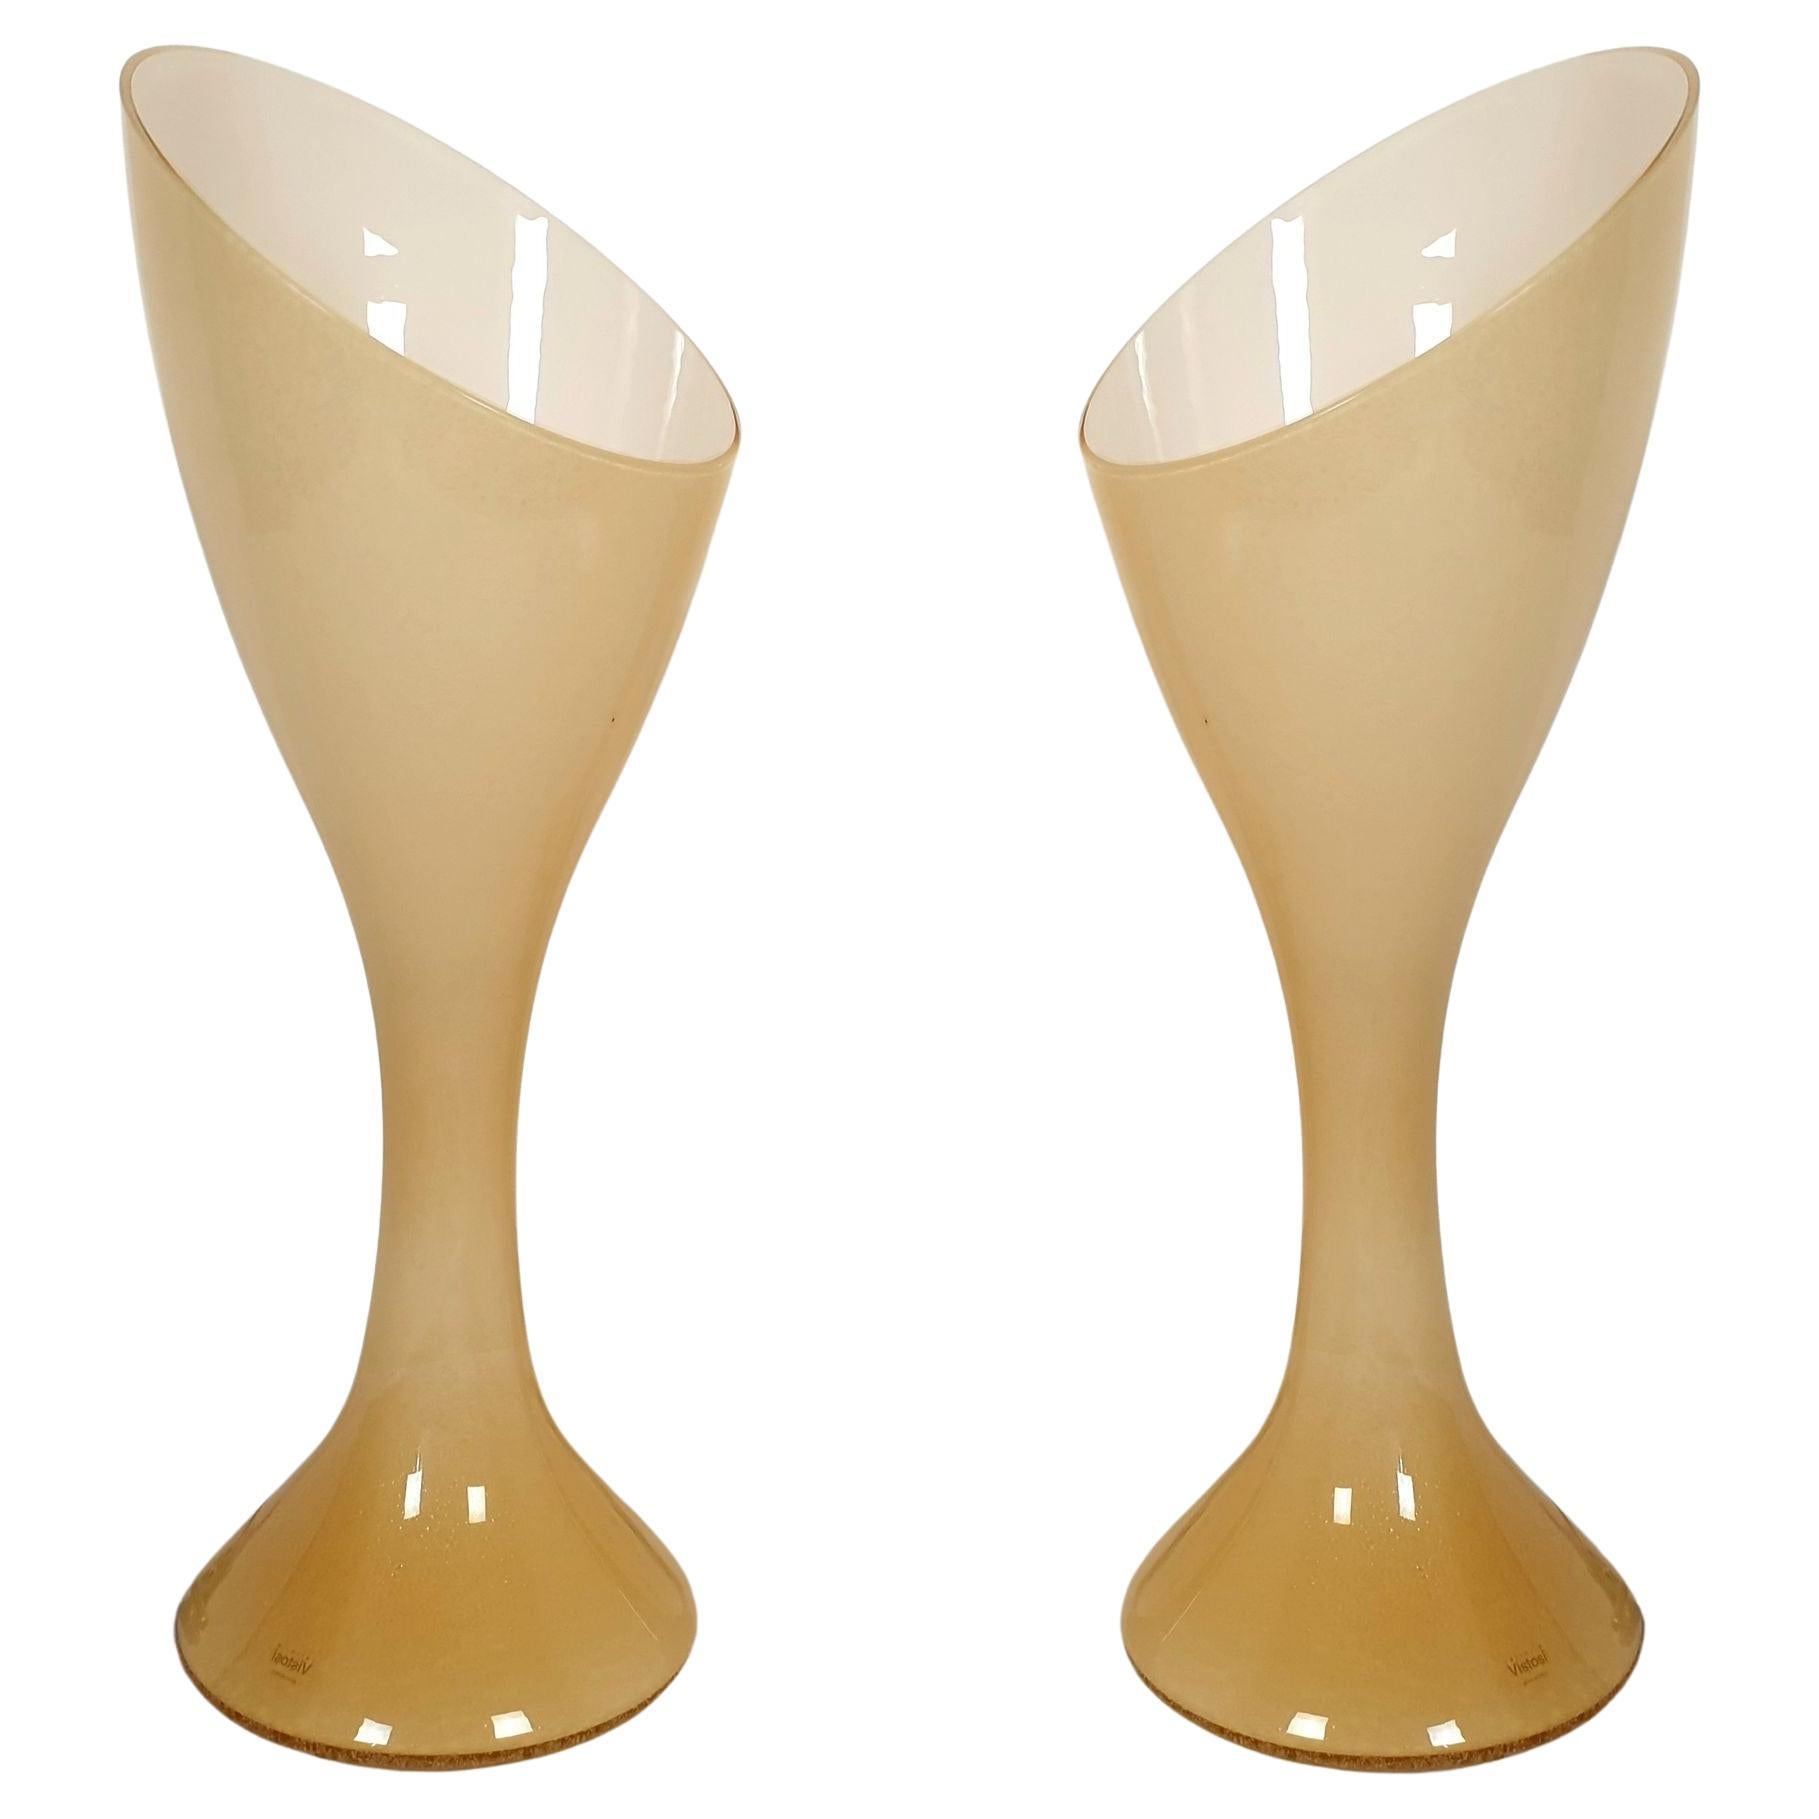 Mid Century Murano Glaslampen von Vistosi - ein Paar